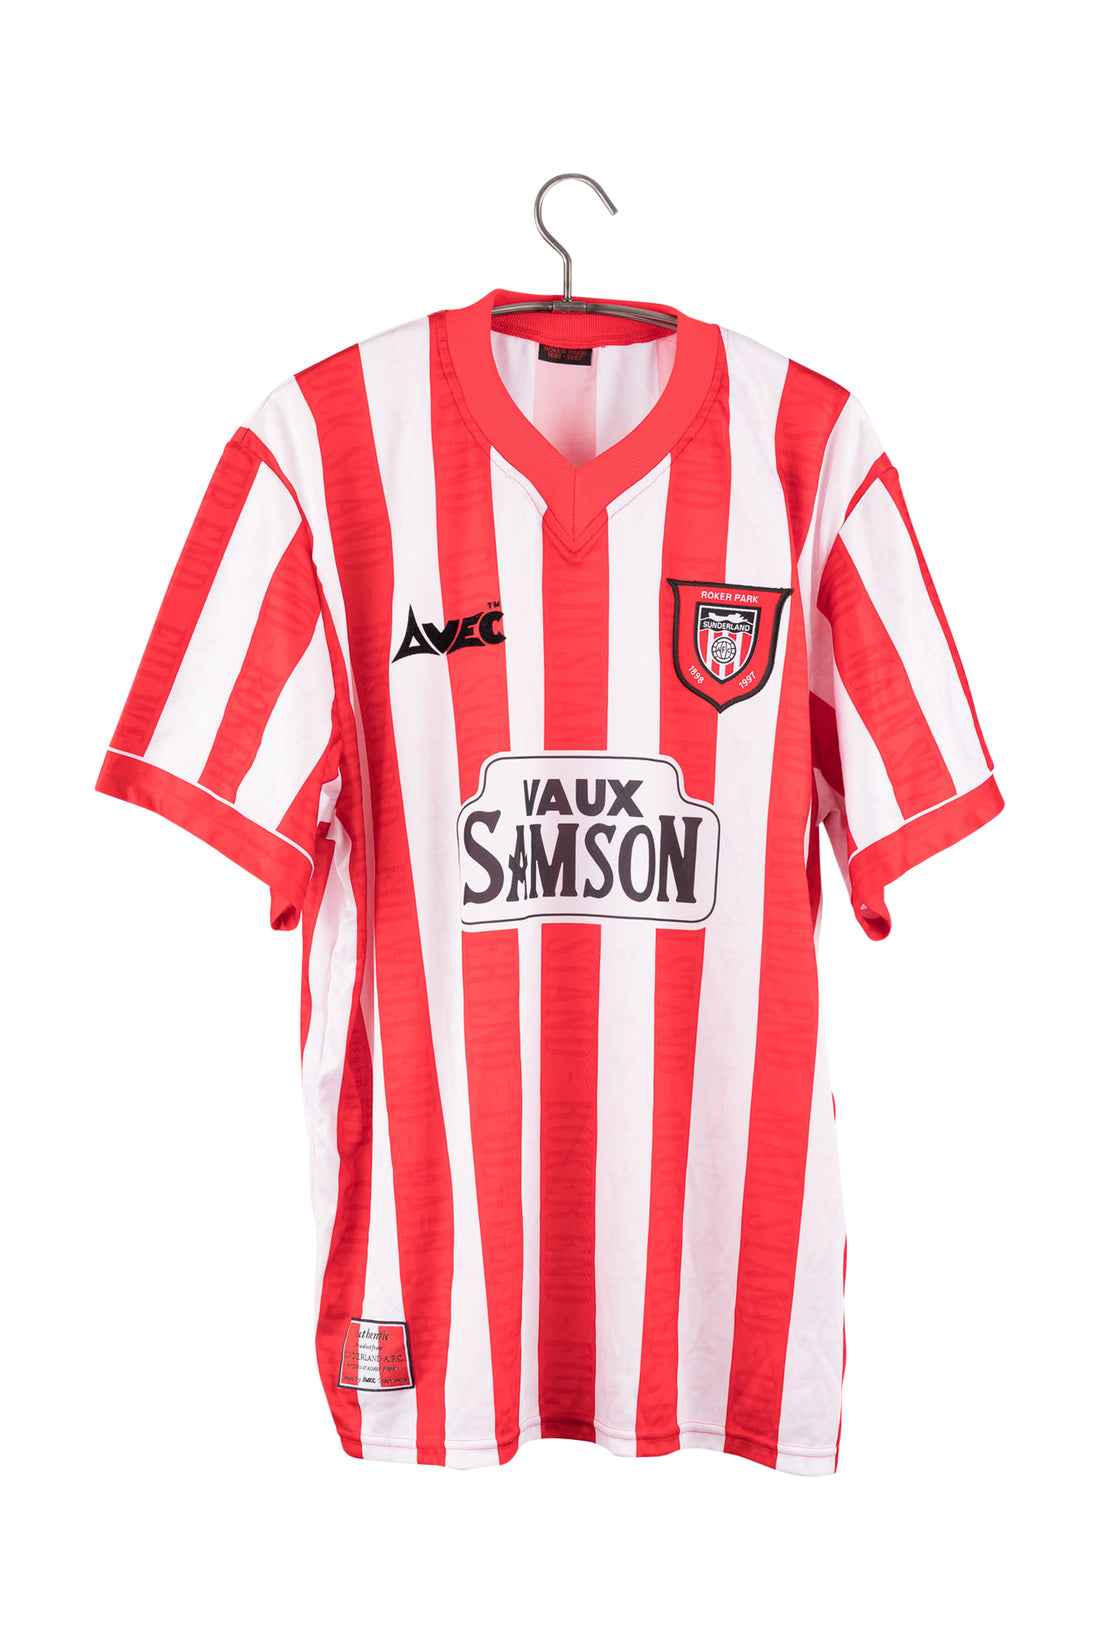 Sunderland 1996 - 1997 Home Football Shirt